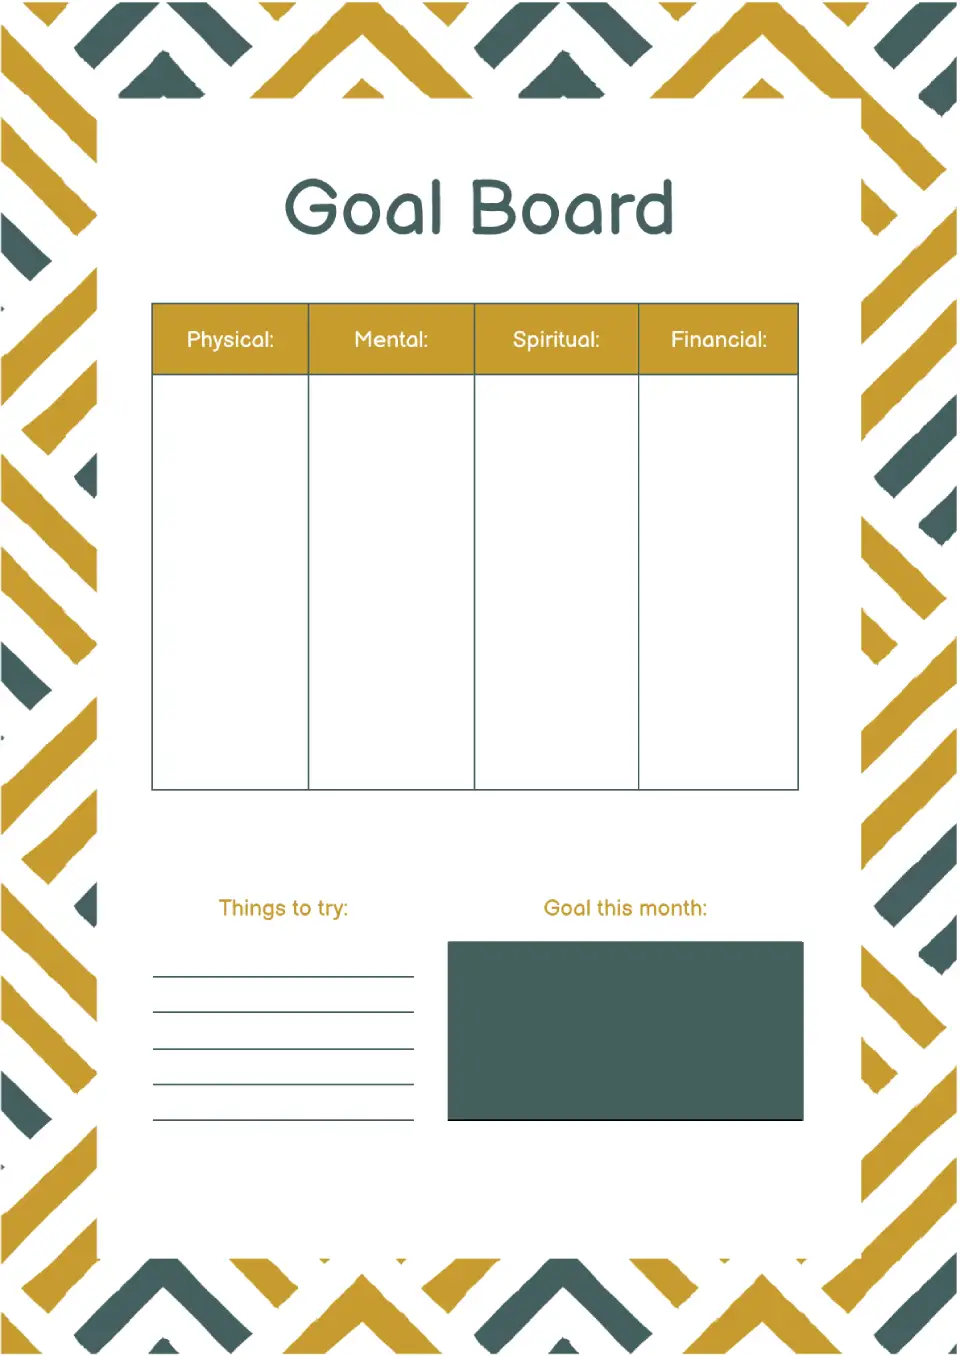 Goal Board Template for Google Docs